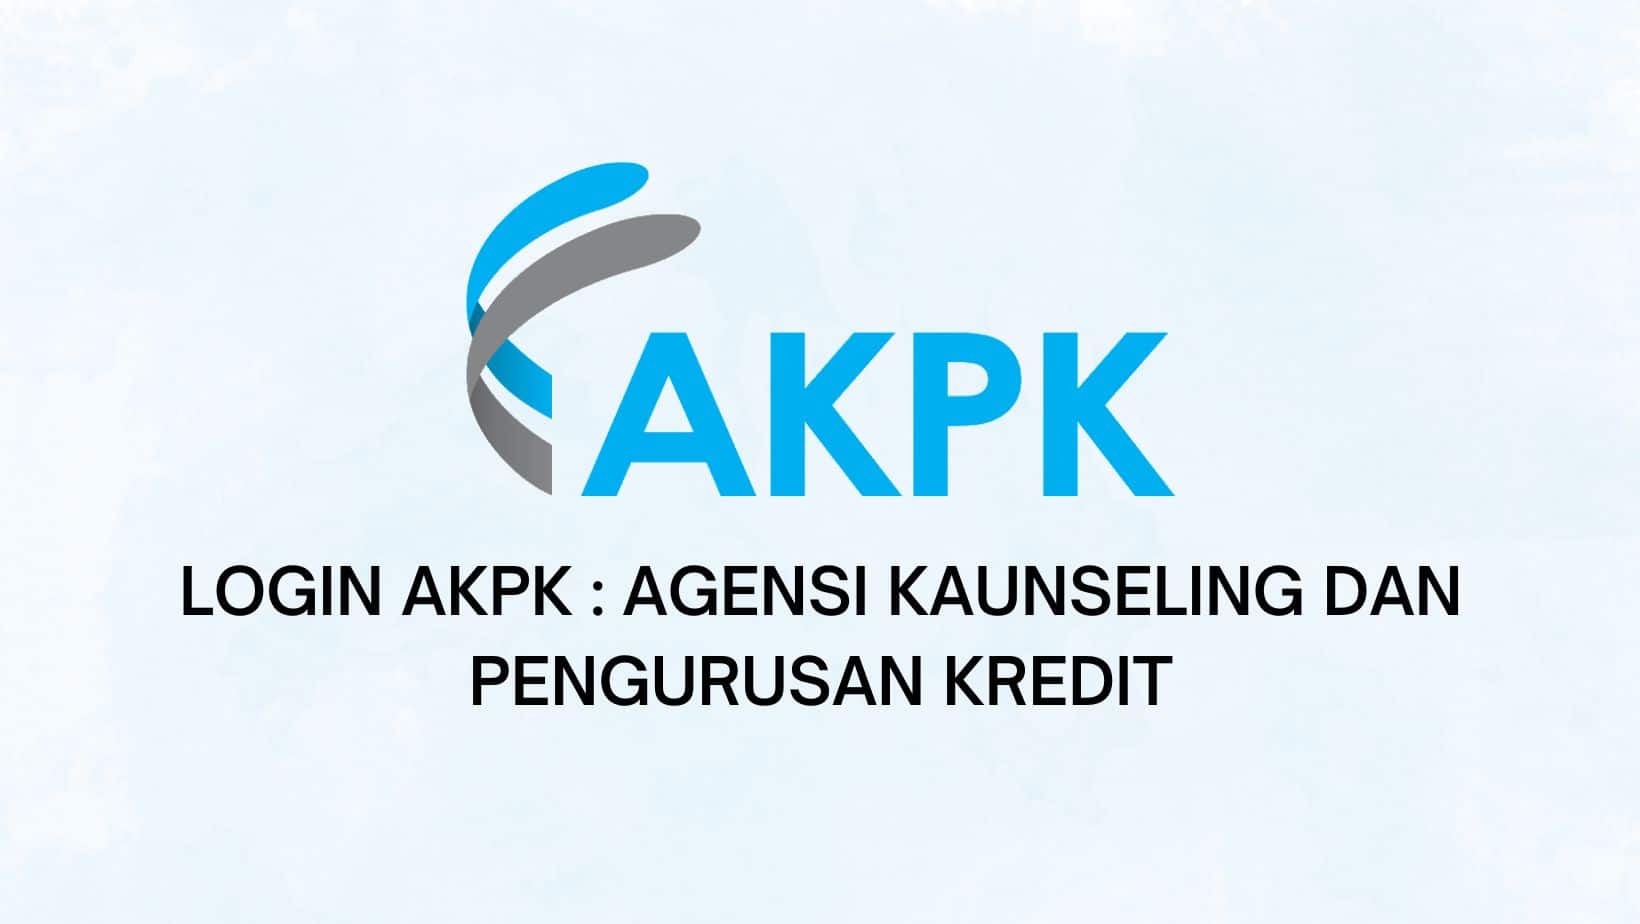 Login AKPK Agensi Kaunseling Dan Pengurusan Kredit